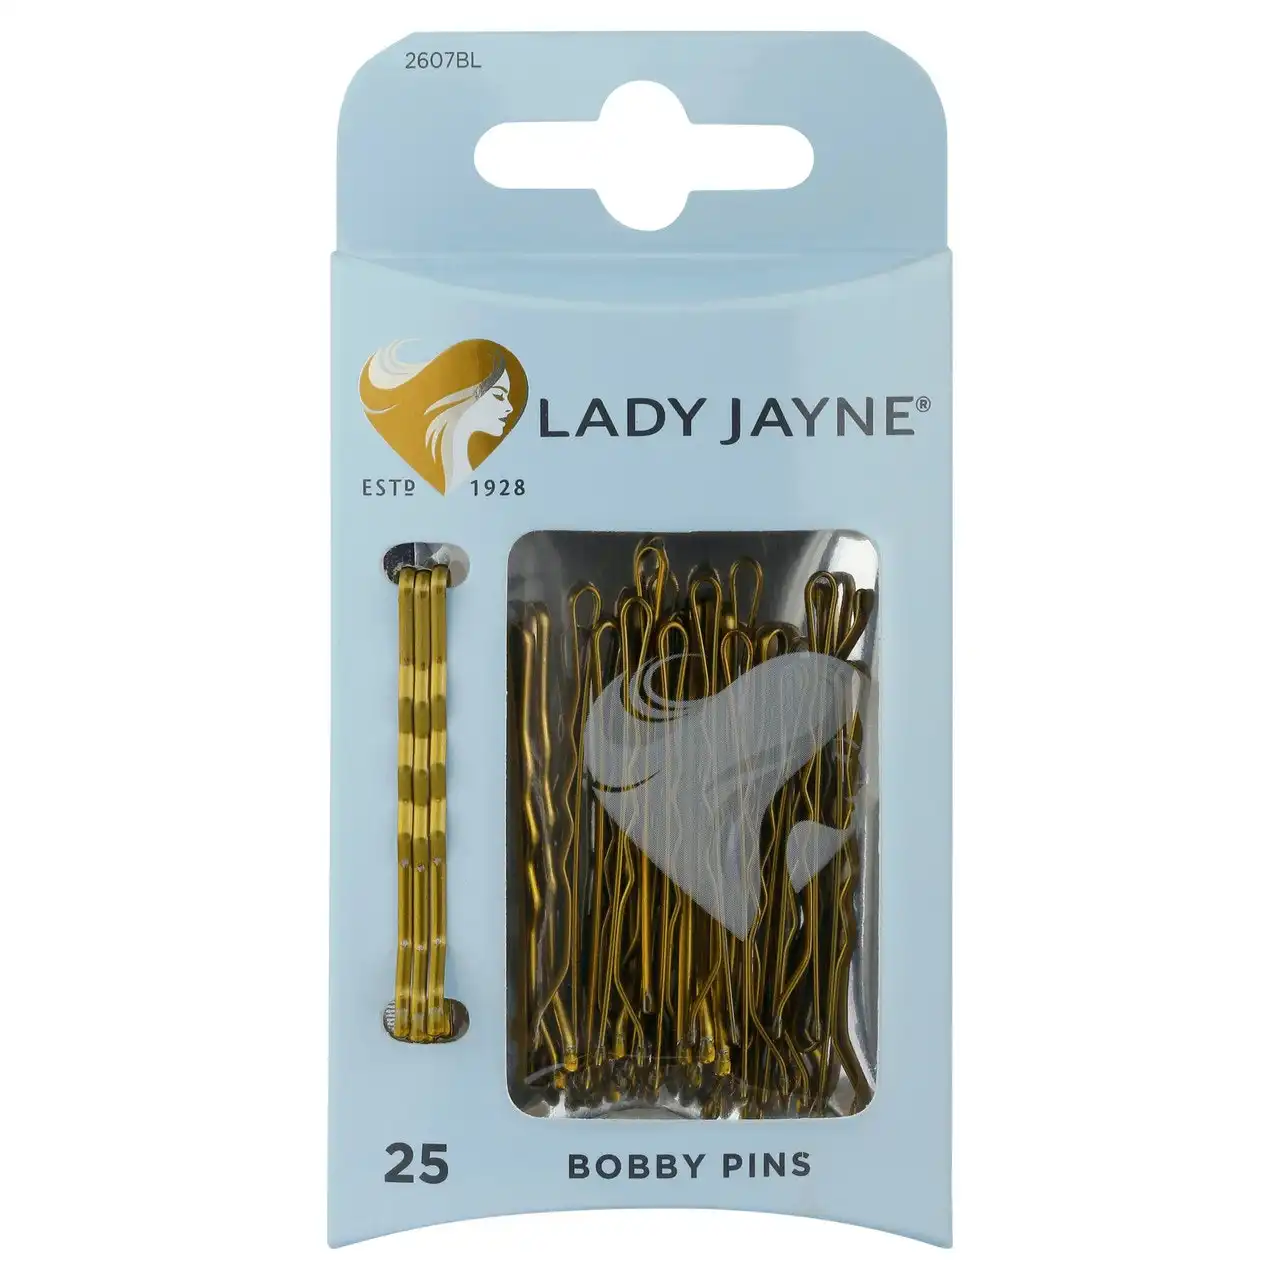 Lady Jayne Blonde Bobby Pins - 25 Pk